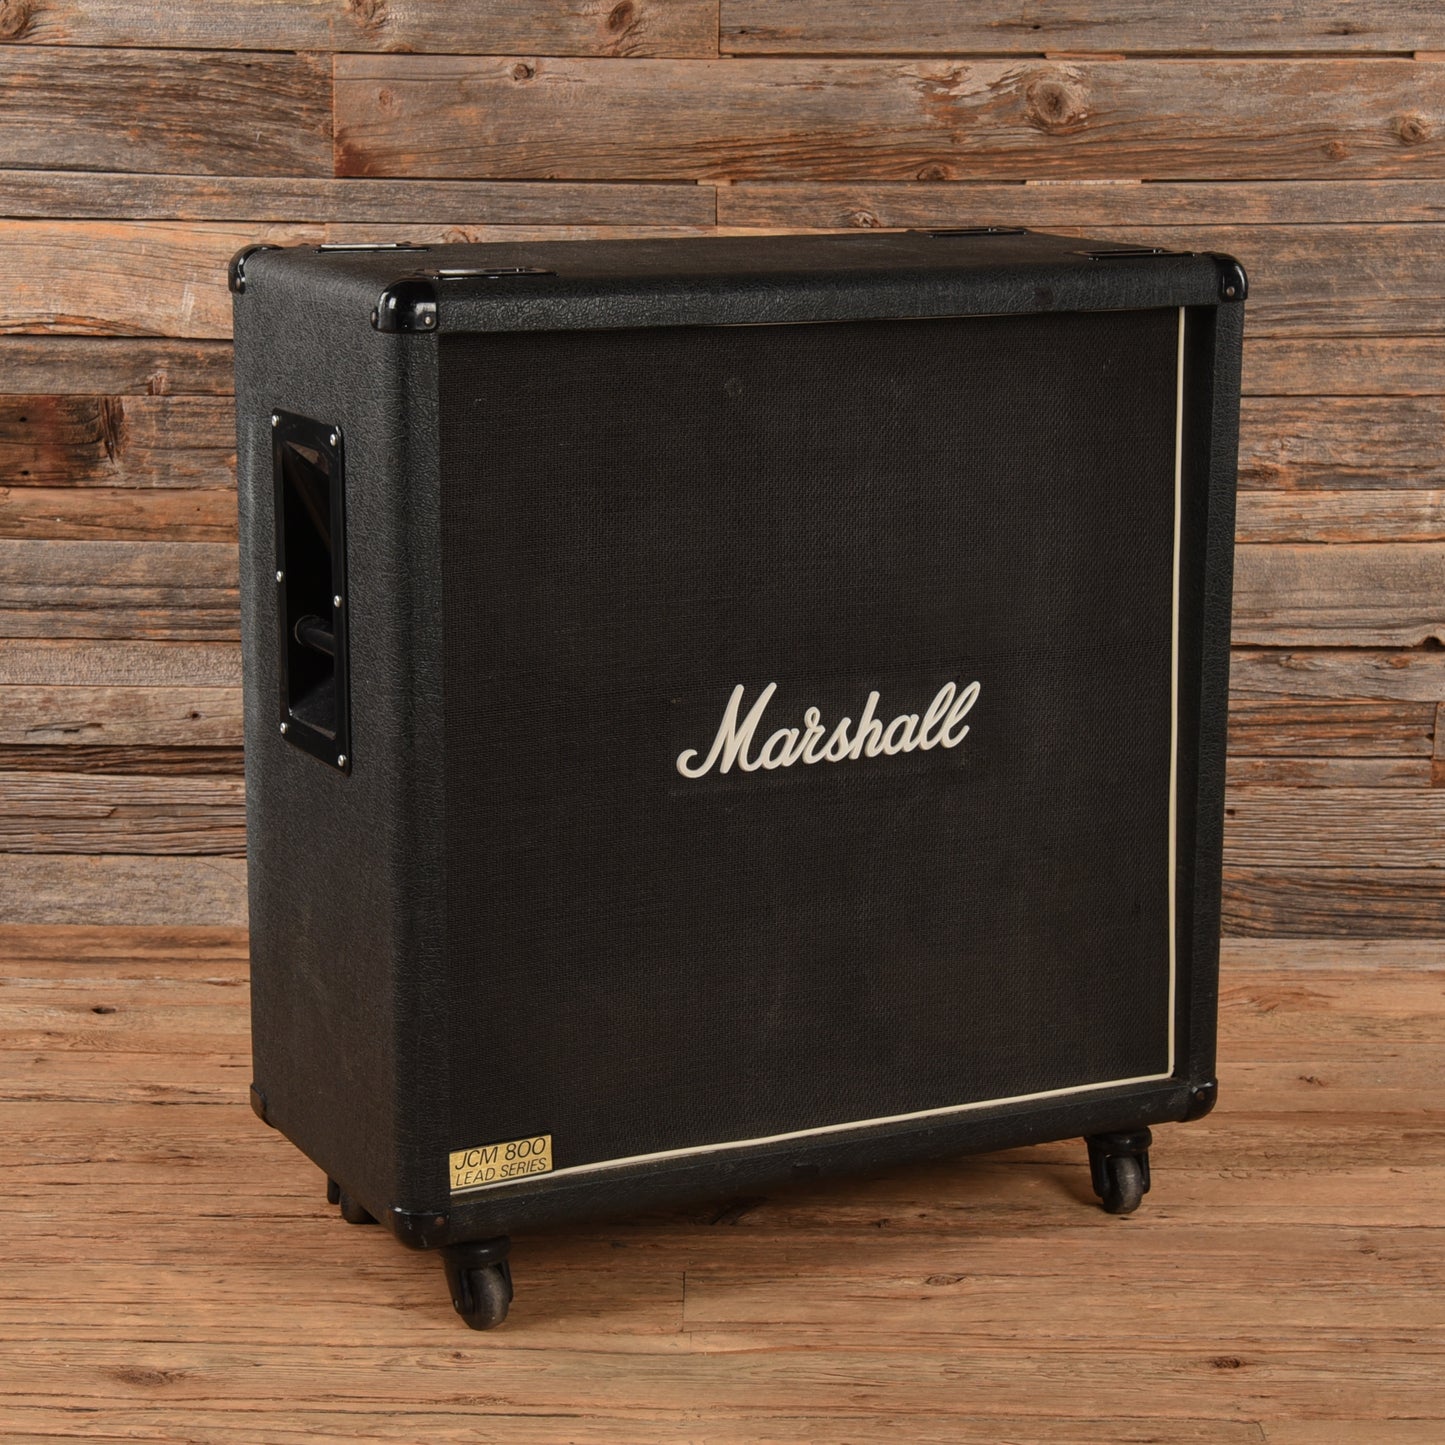 Marshall JCM800 Lead Series 1960B 4x12" Guitar Speaker Cab  1980s